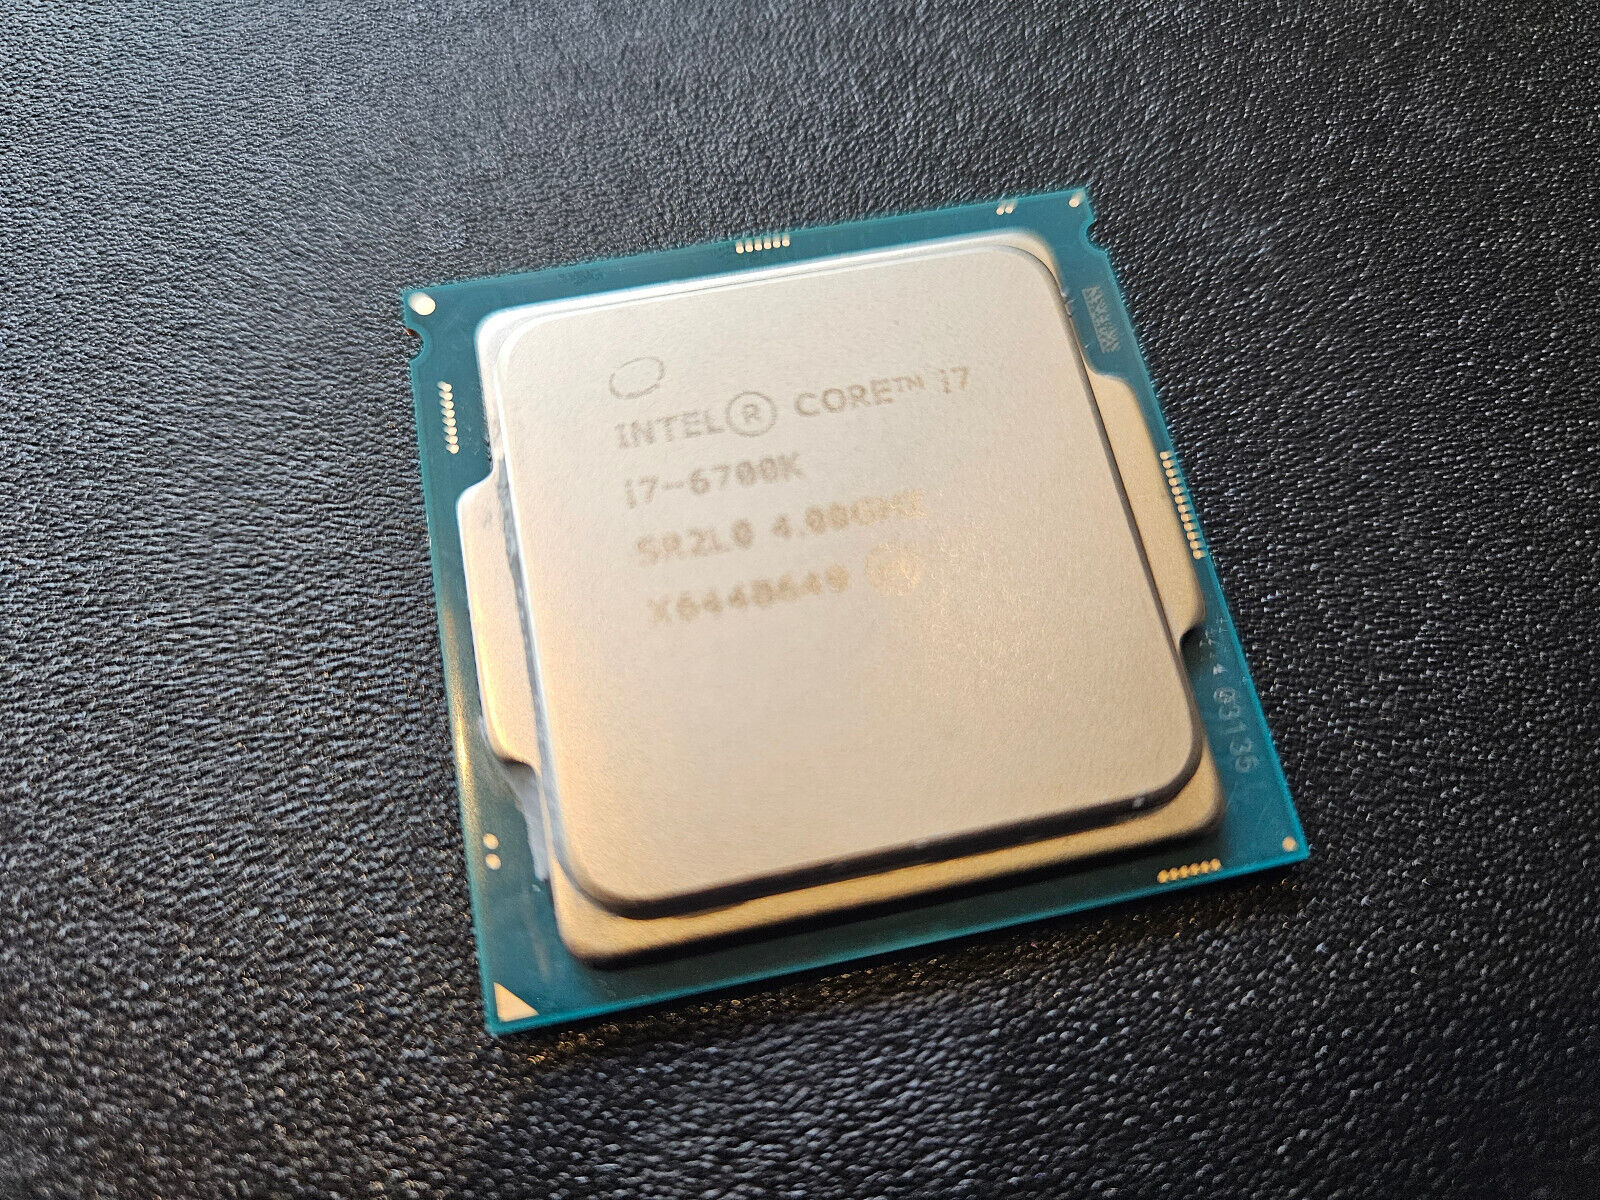 Intel Core i7-6700K 4.0 GHz Quad-Core (BX80662I76700K) Processor